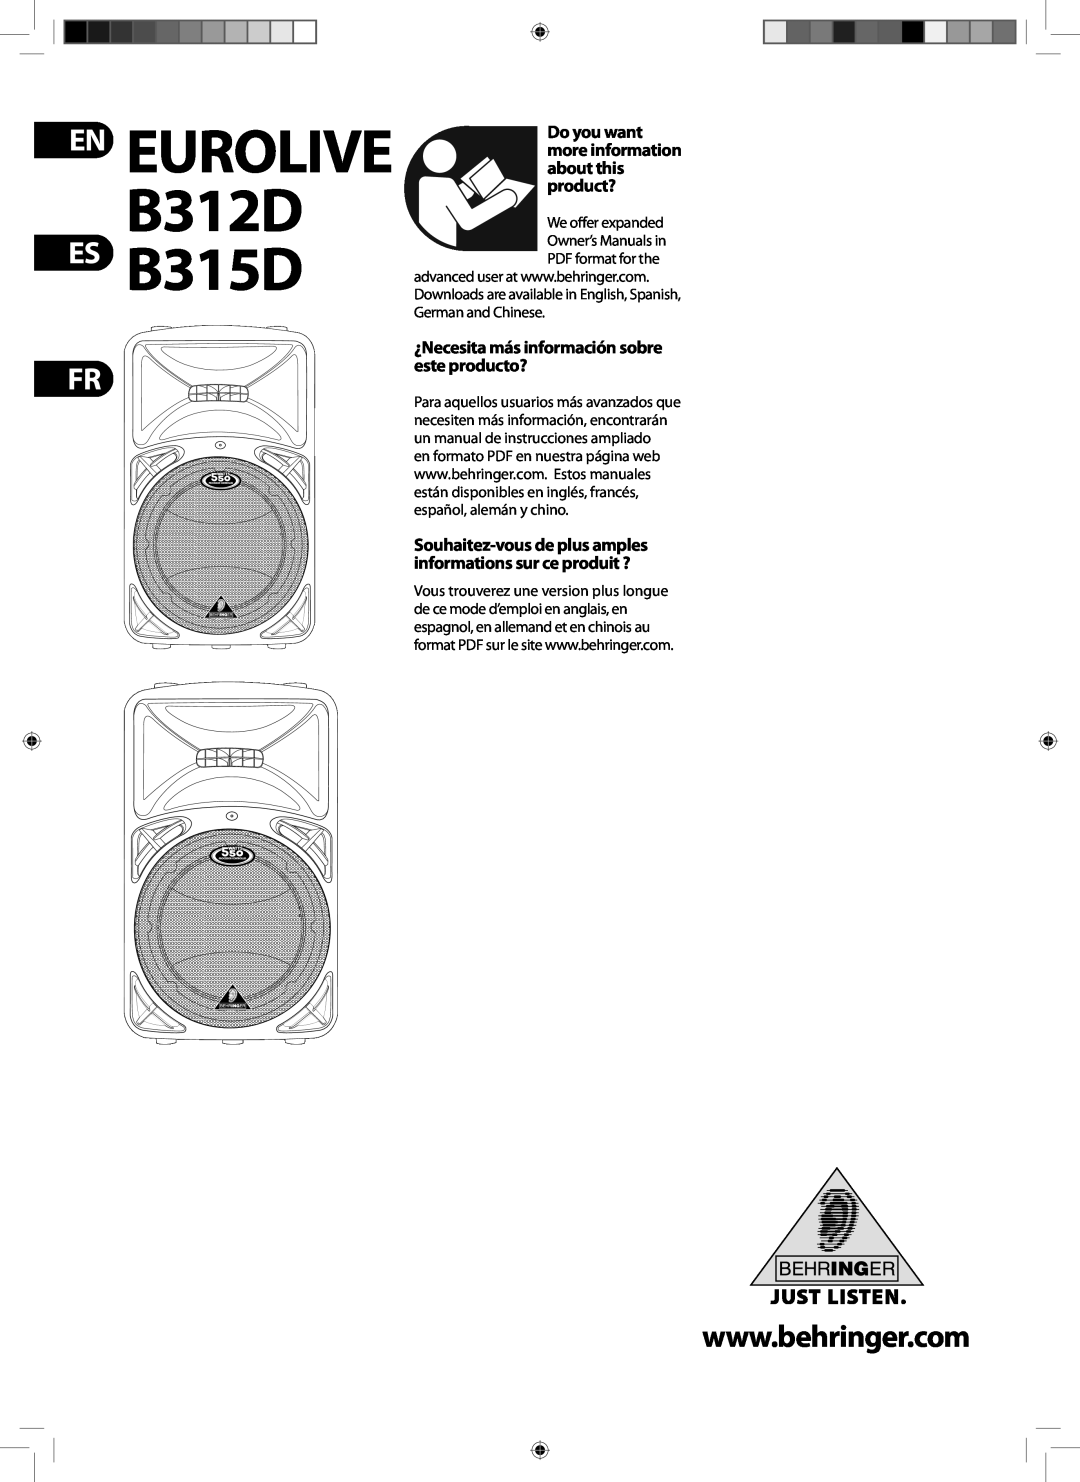 Behringer manual En Es, Do you want more information about this product?, EUROLIVE B312D B315D 